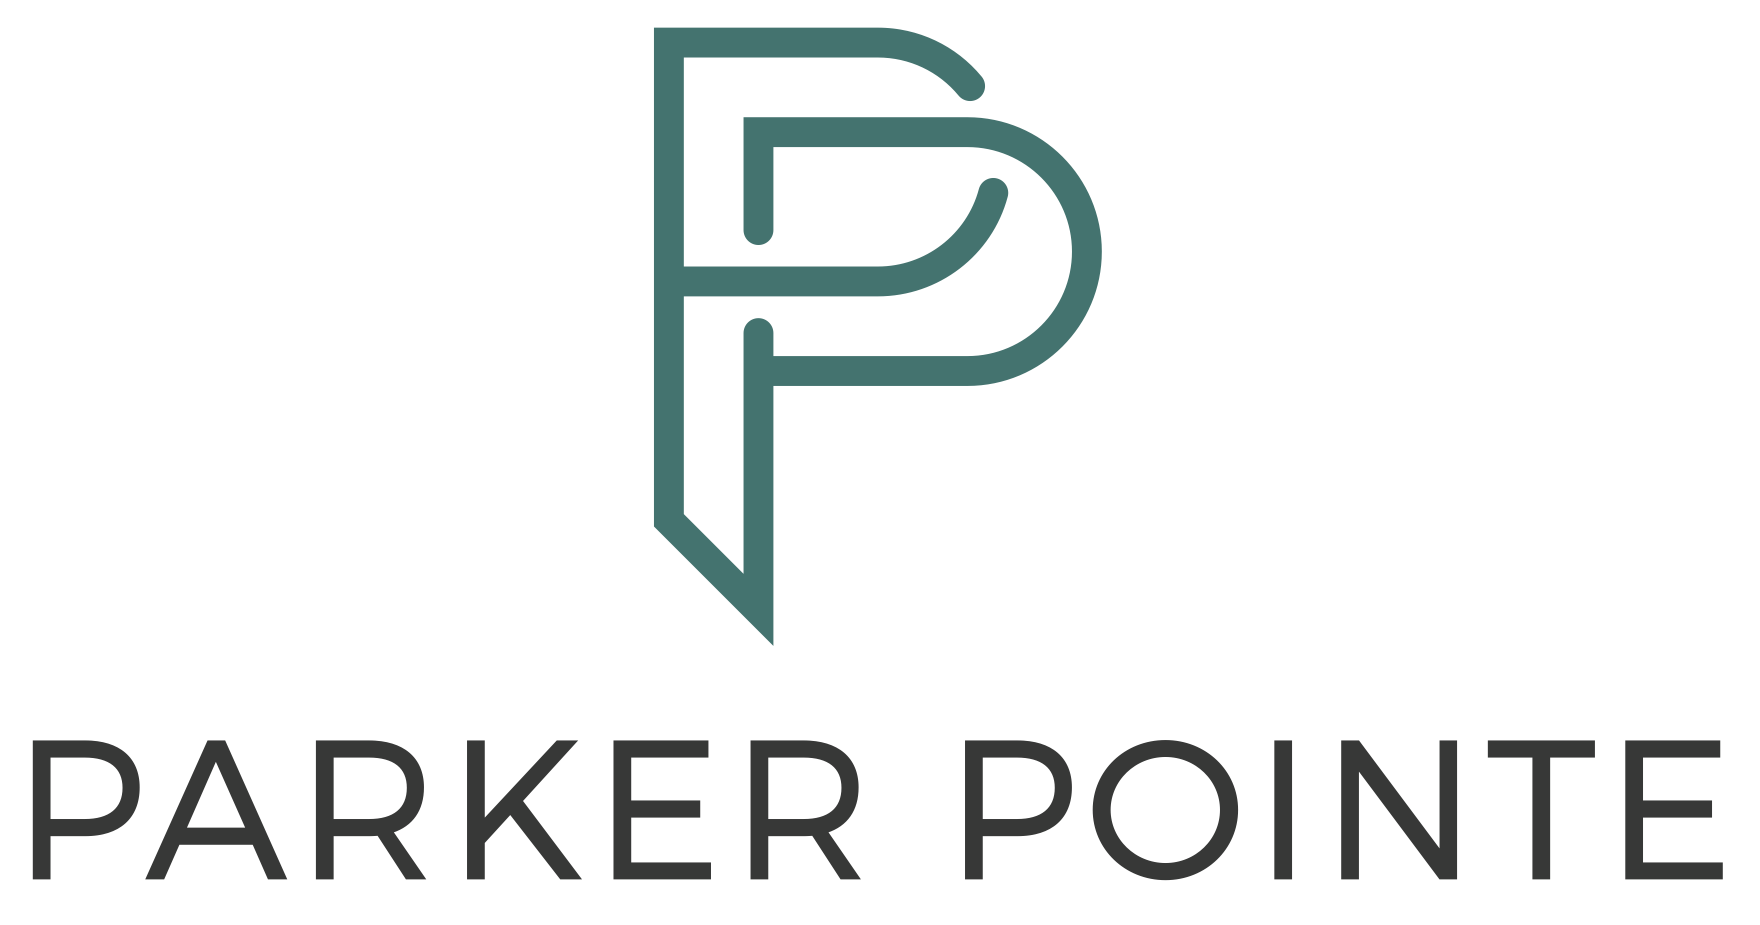 Parker Pointe